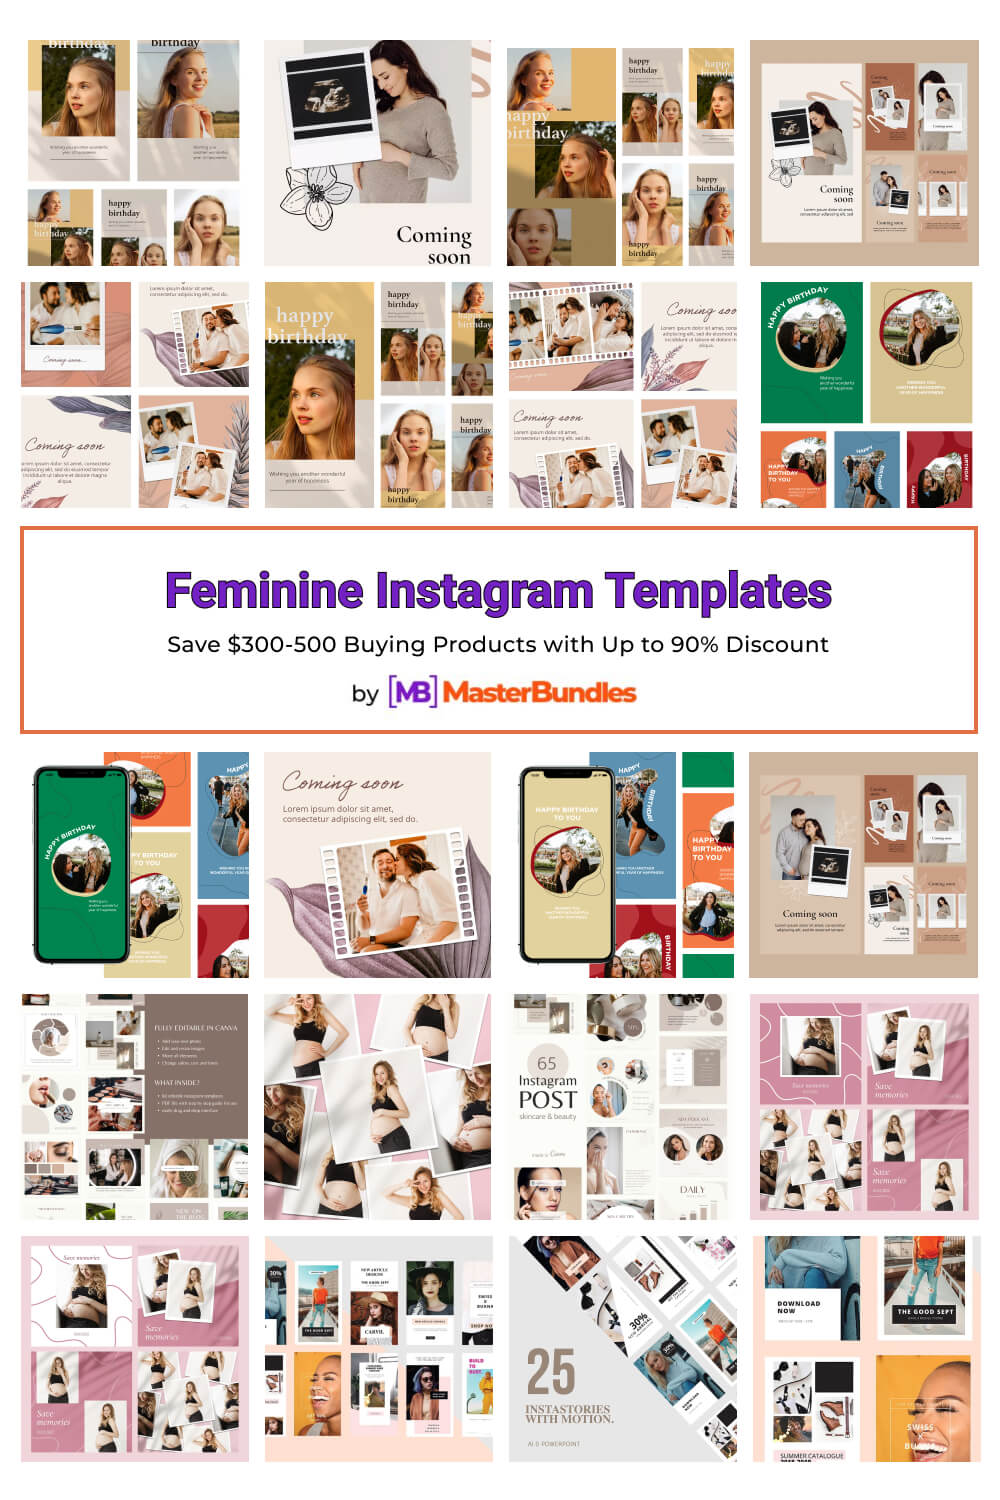 feminine instagram templates pinterest image.